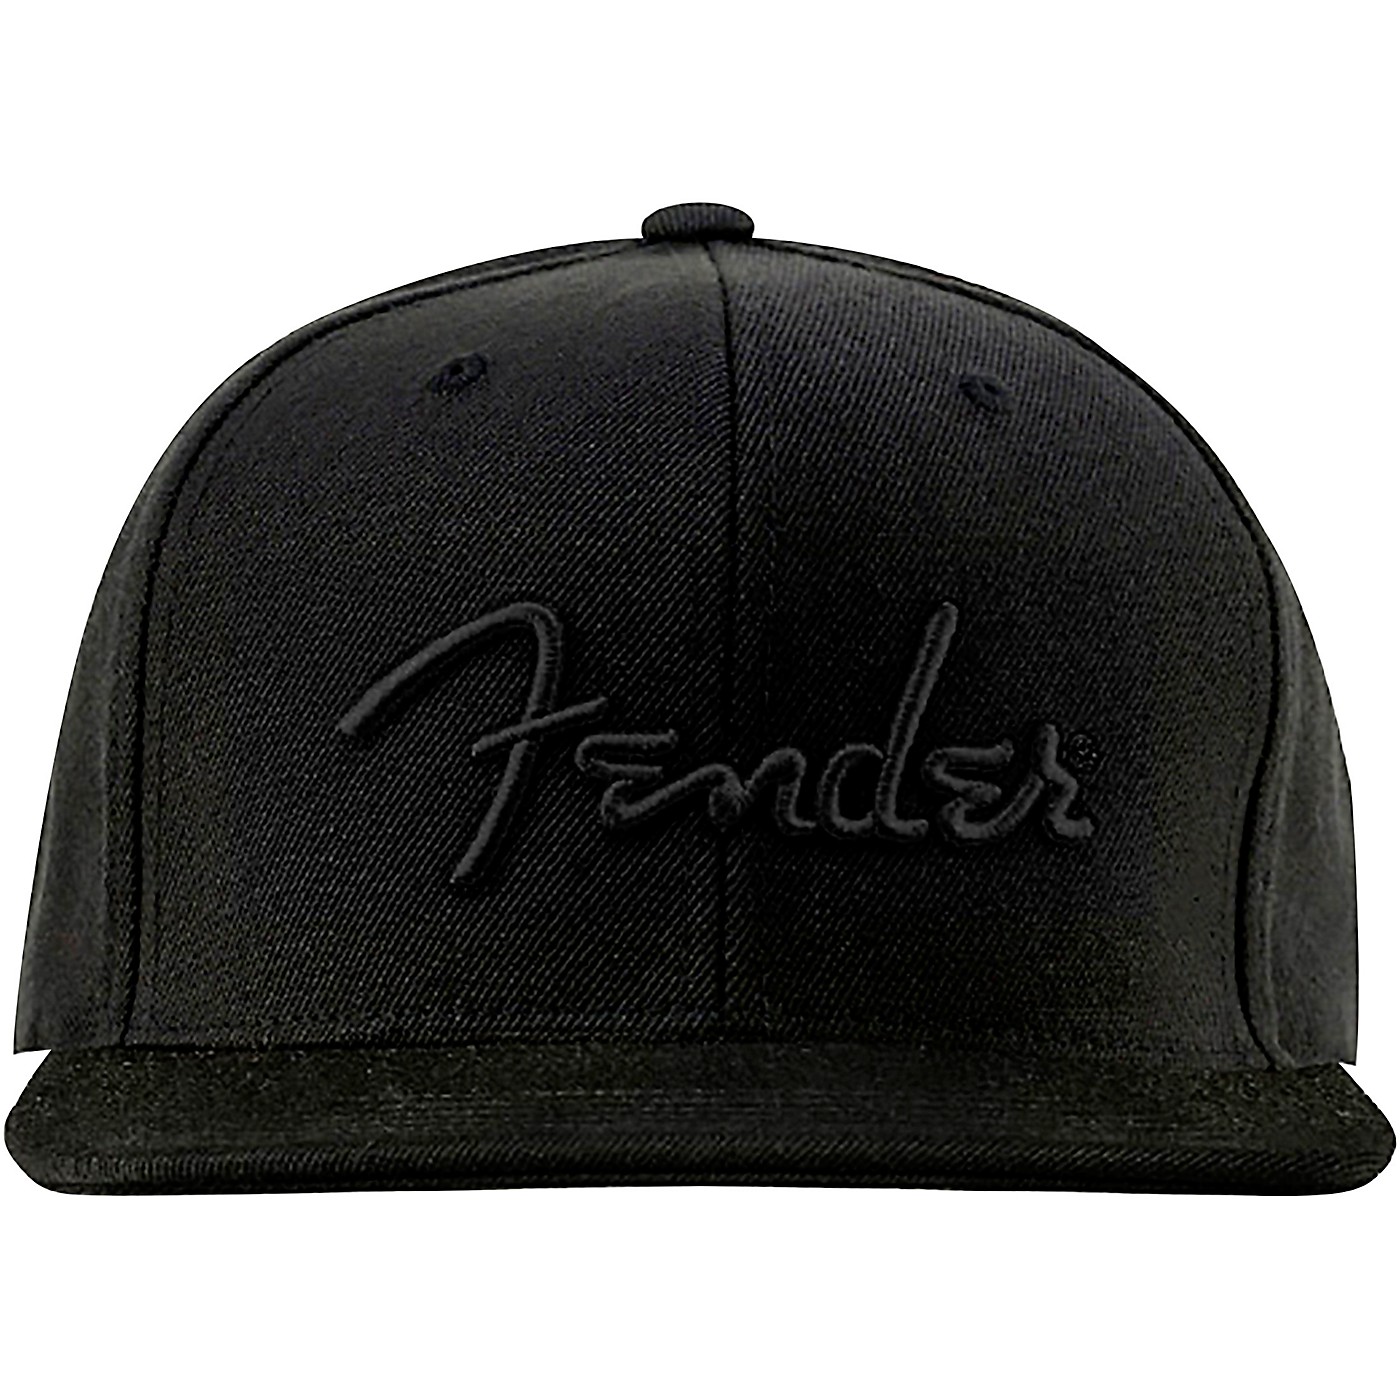 Fender Black Flatbill Hat thumbnail